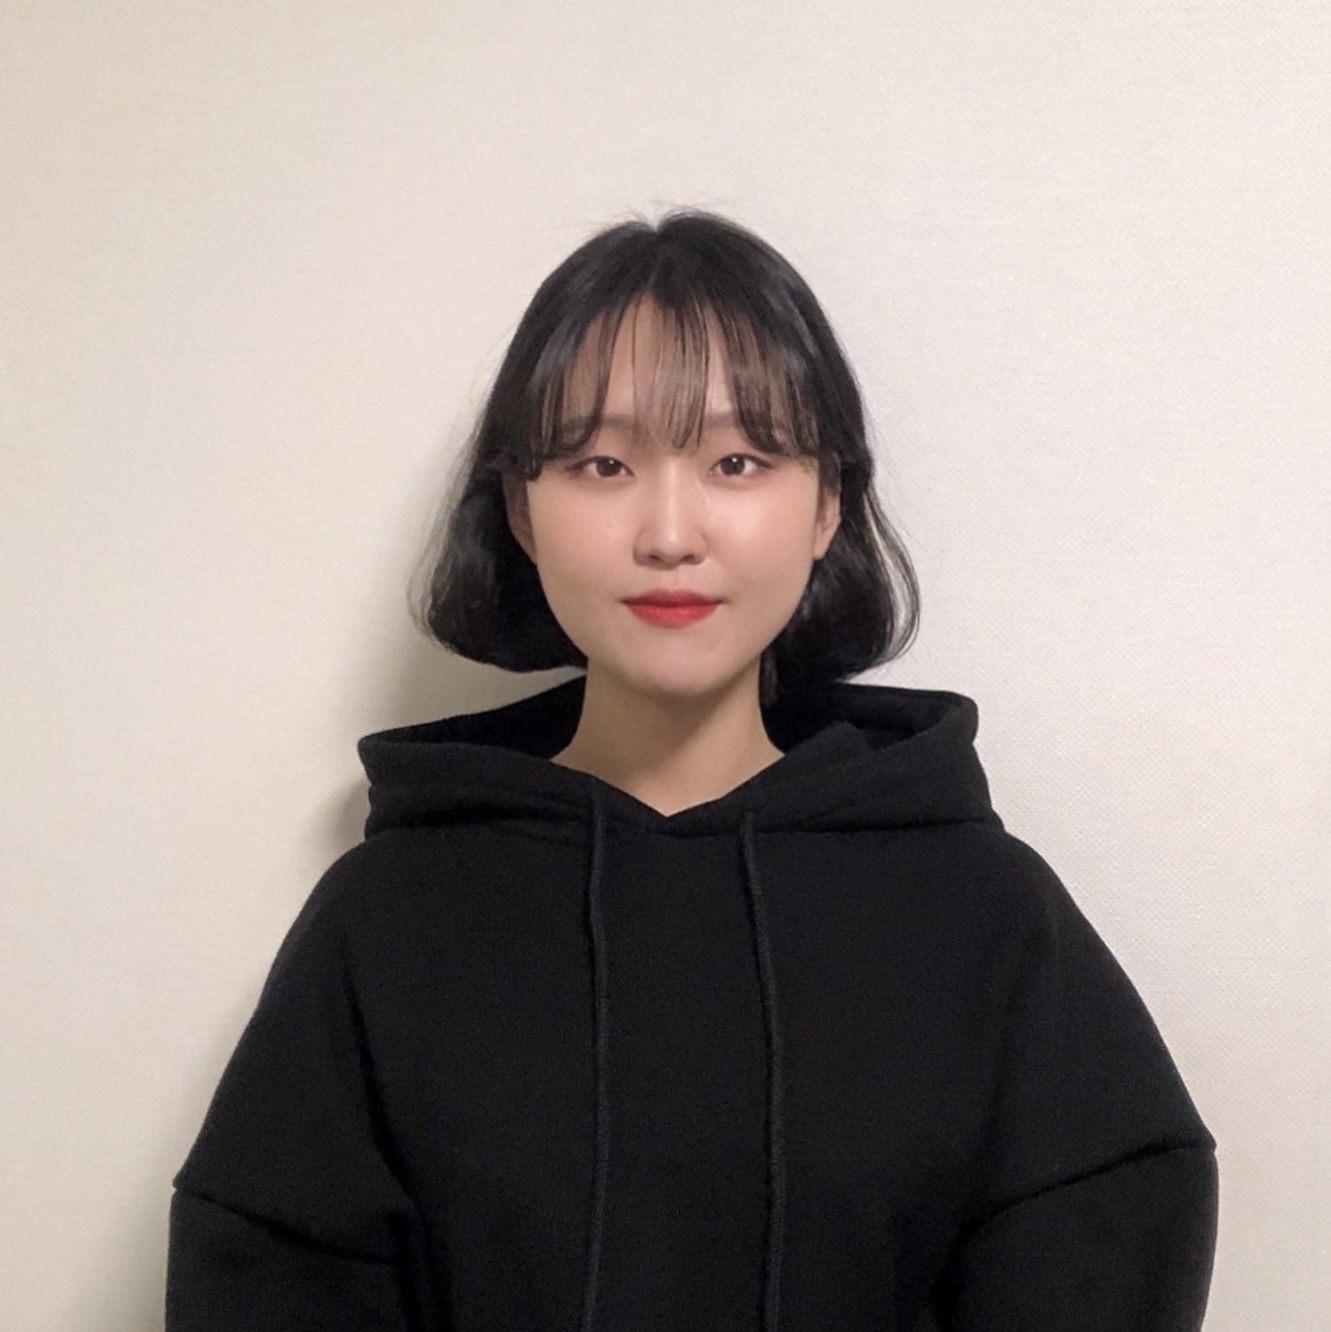 Eunsoo Kim (MS student)